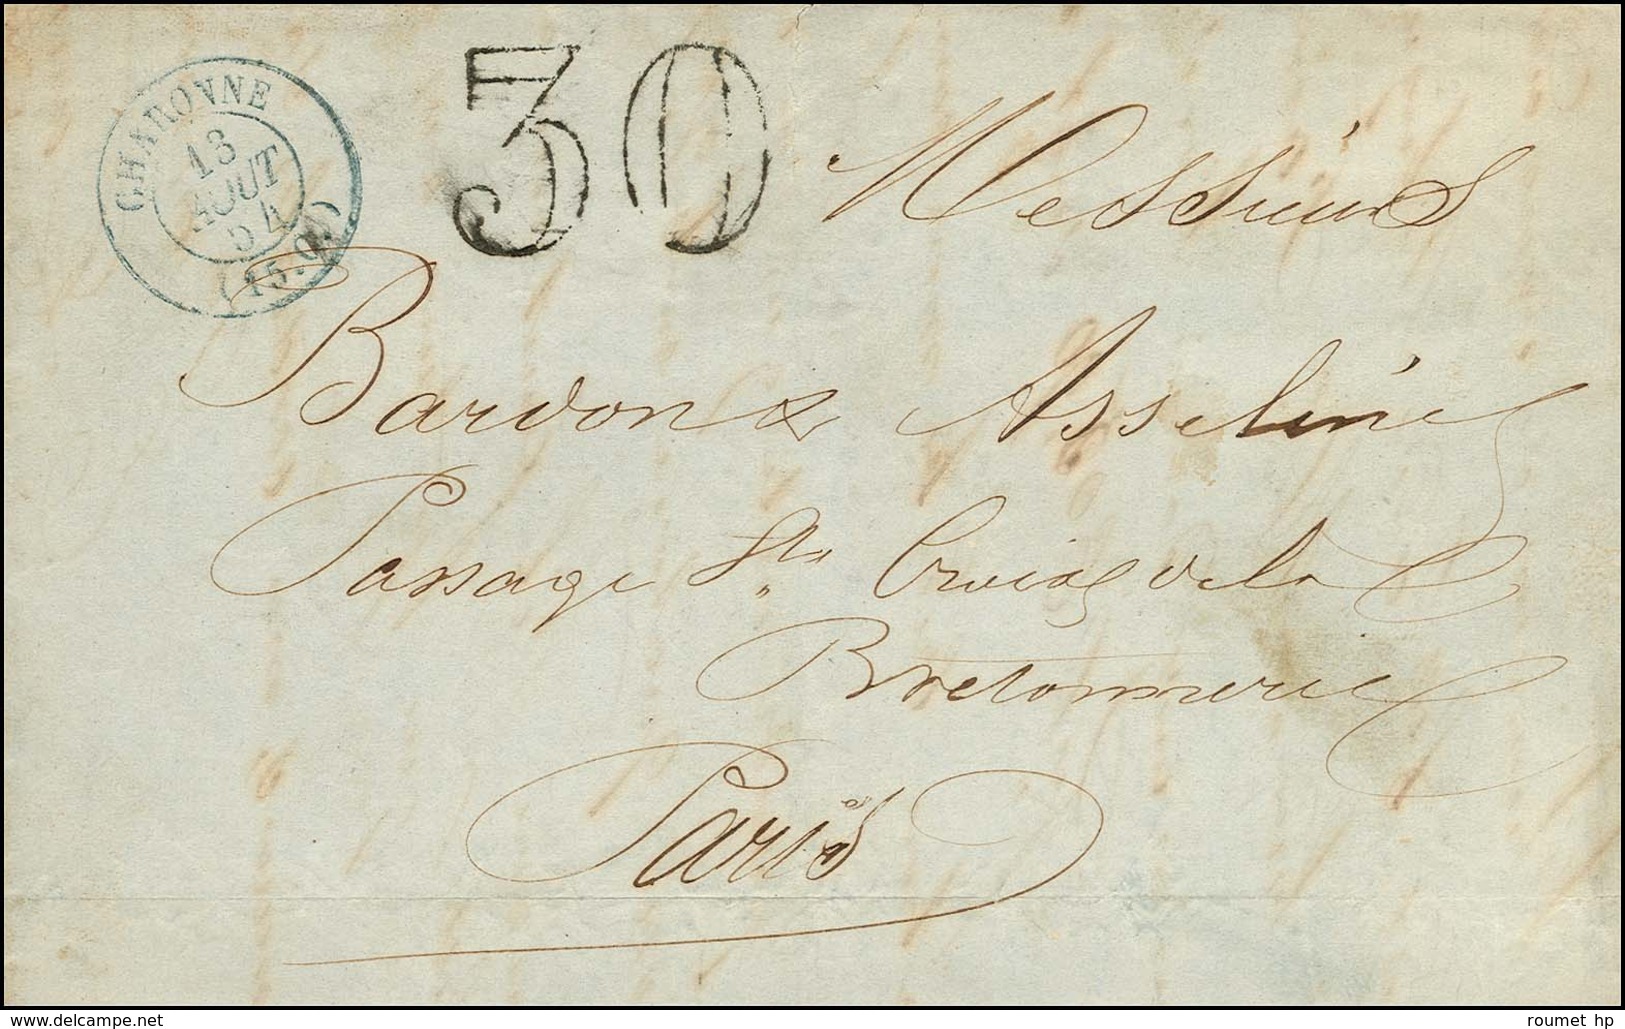 Càd Taxe Bleu CHARONNE / (15c.) + Taxe 30 DT. 1854. - SUP. - 1859-1959 Briefe & Dokumente